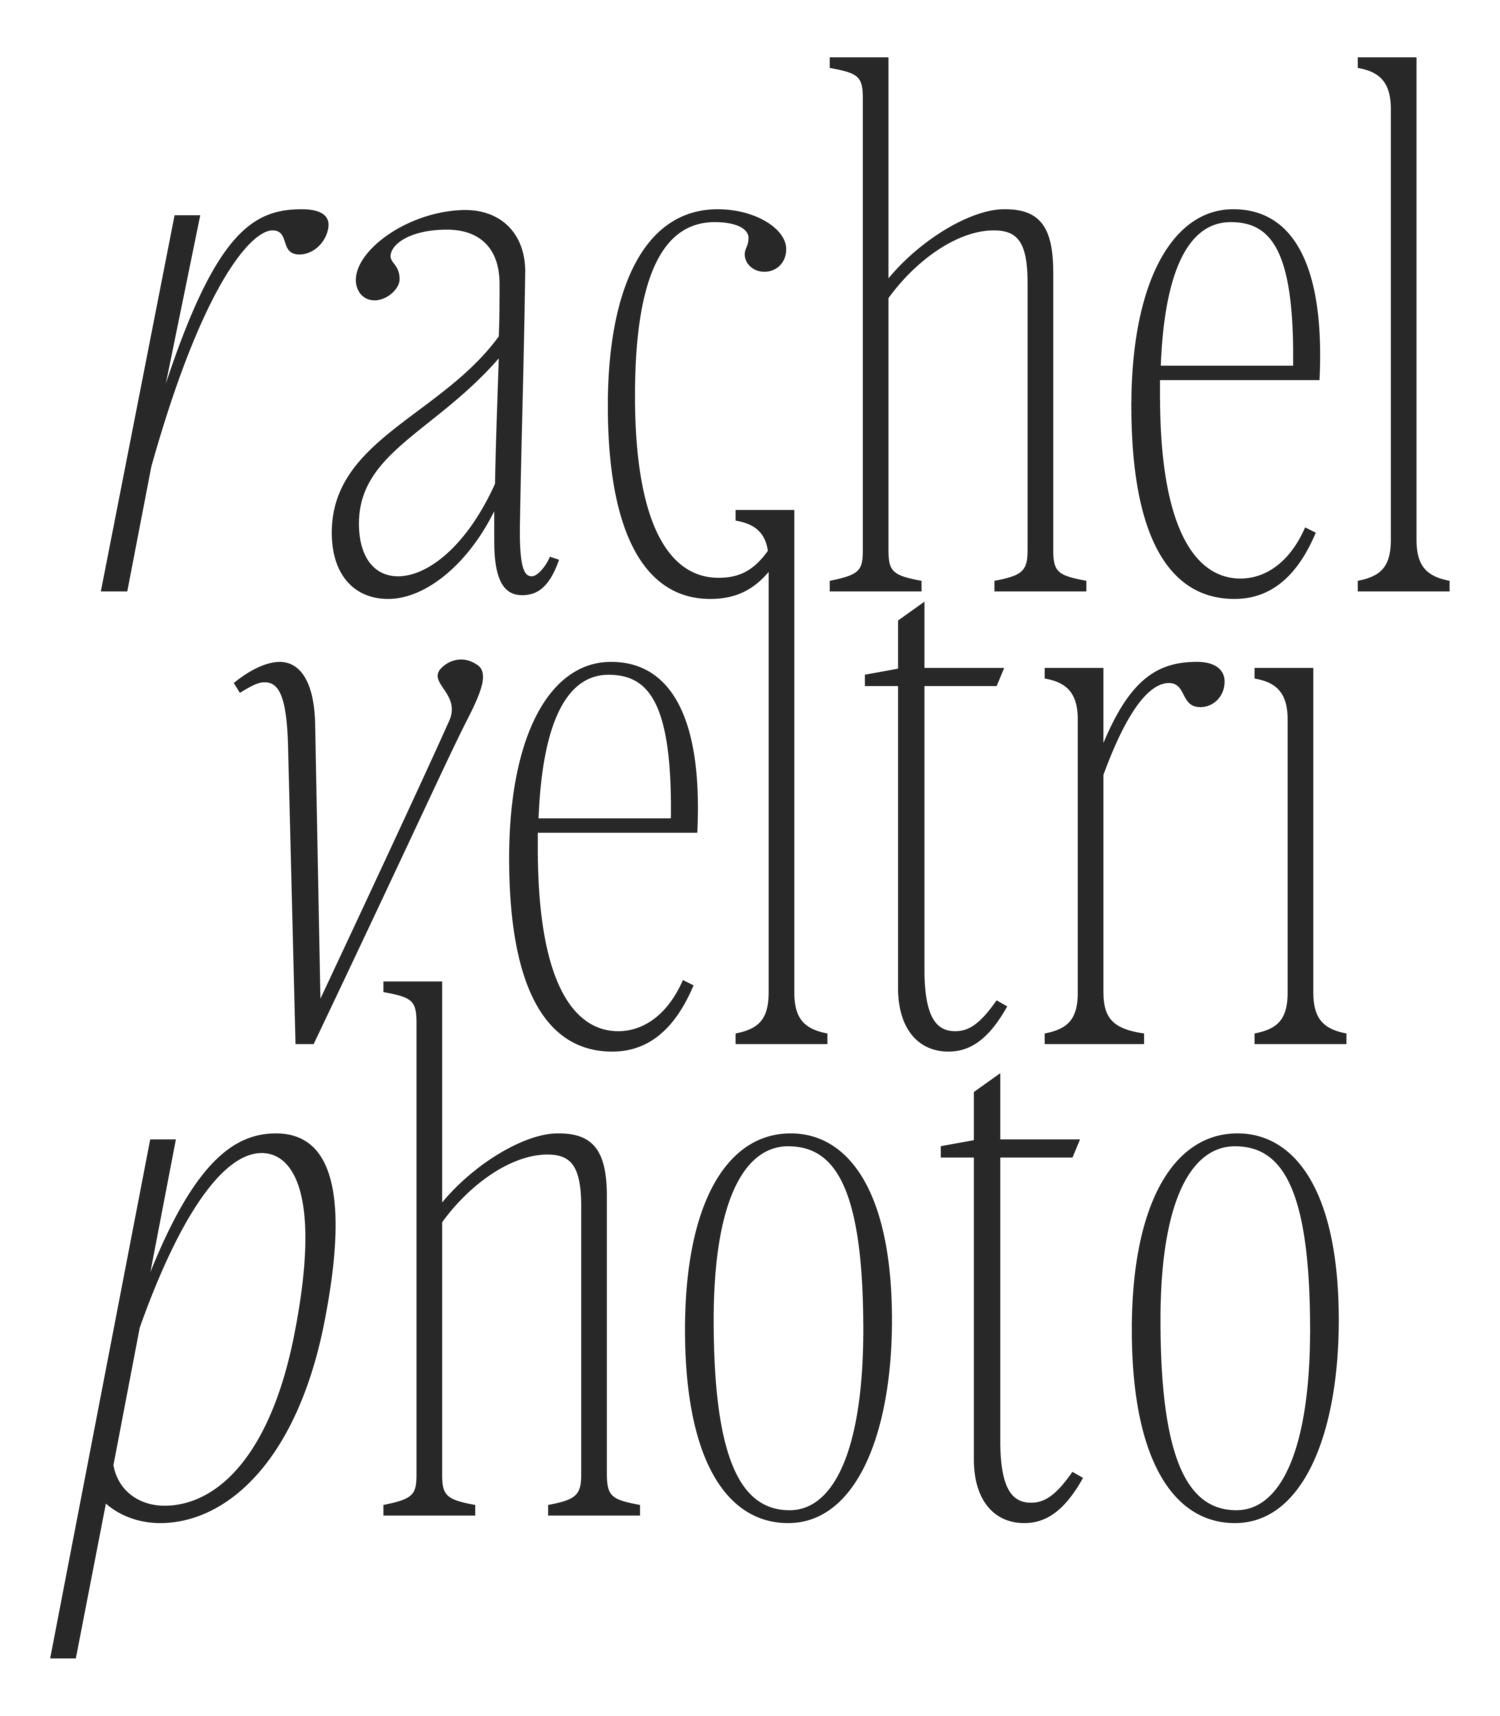 Rachel Veltri Photo